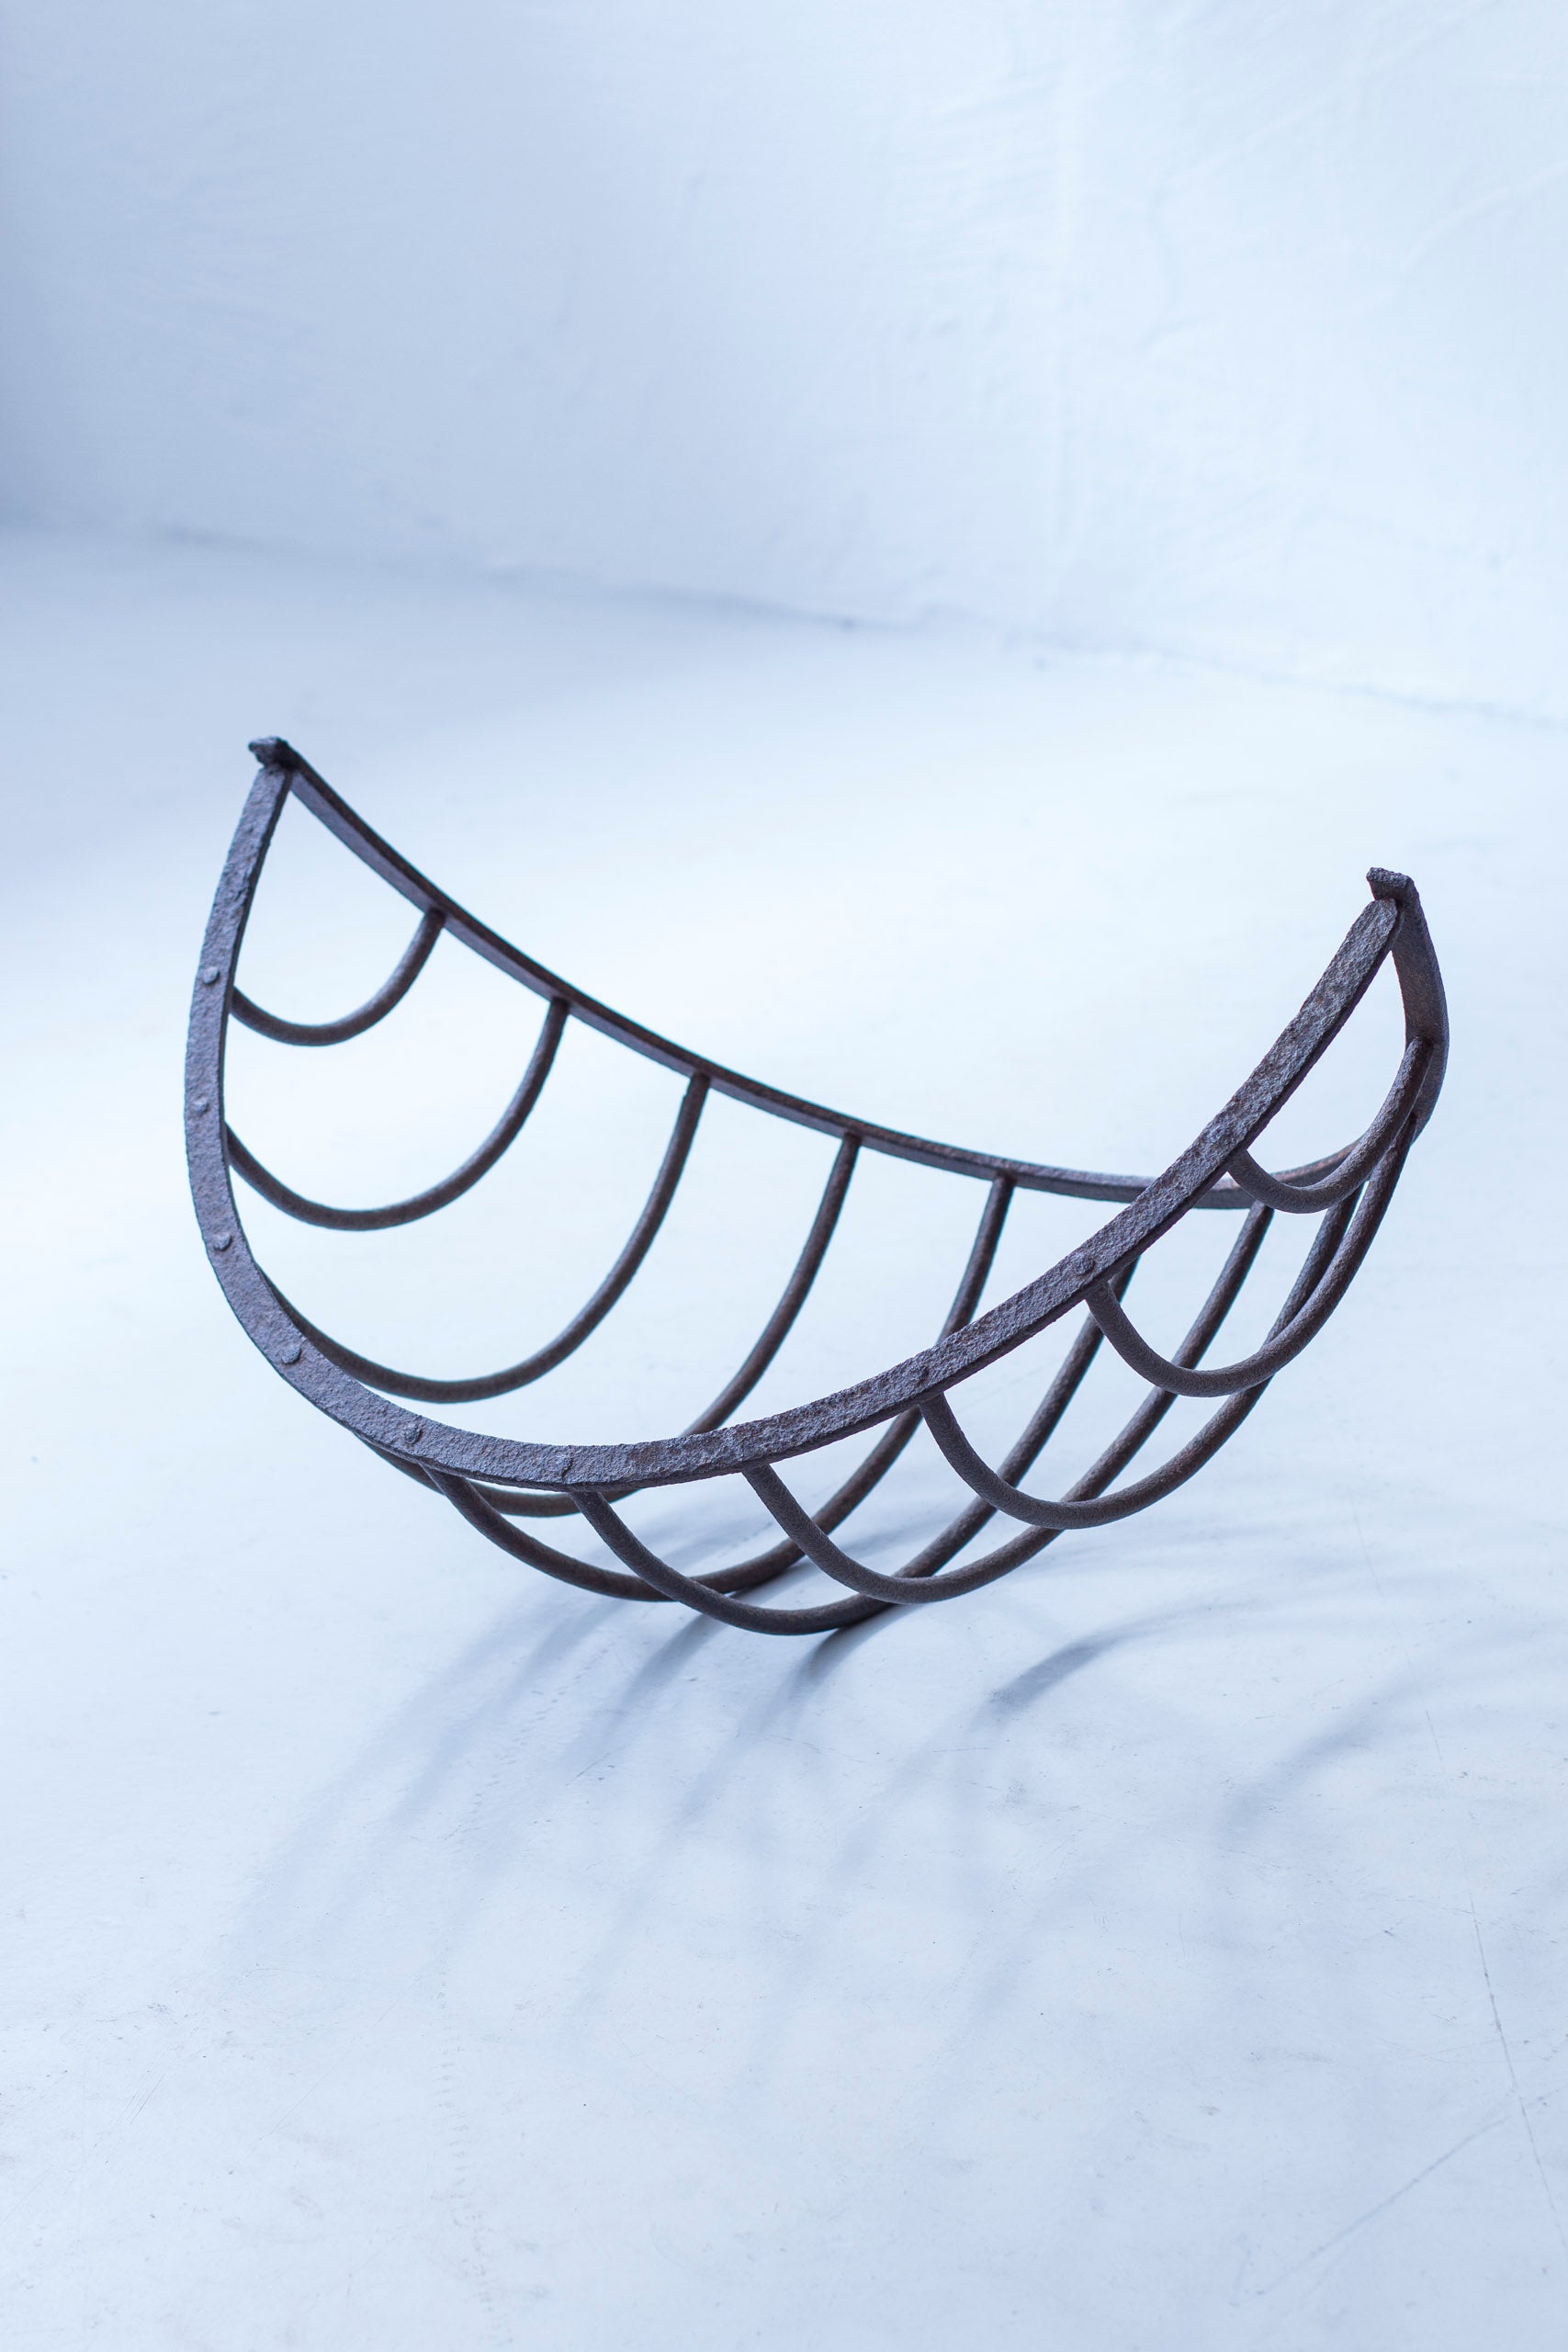 Cast iron basket or sculpture